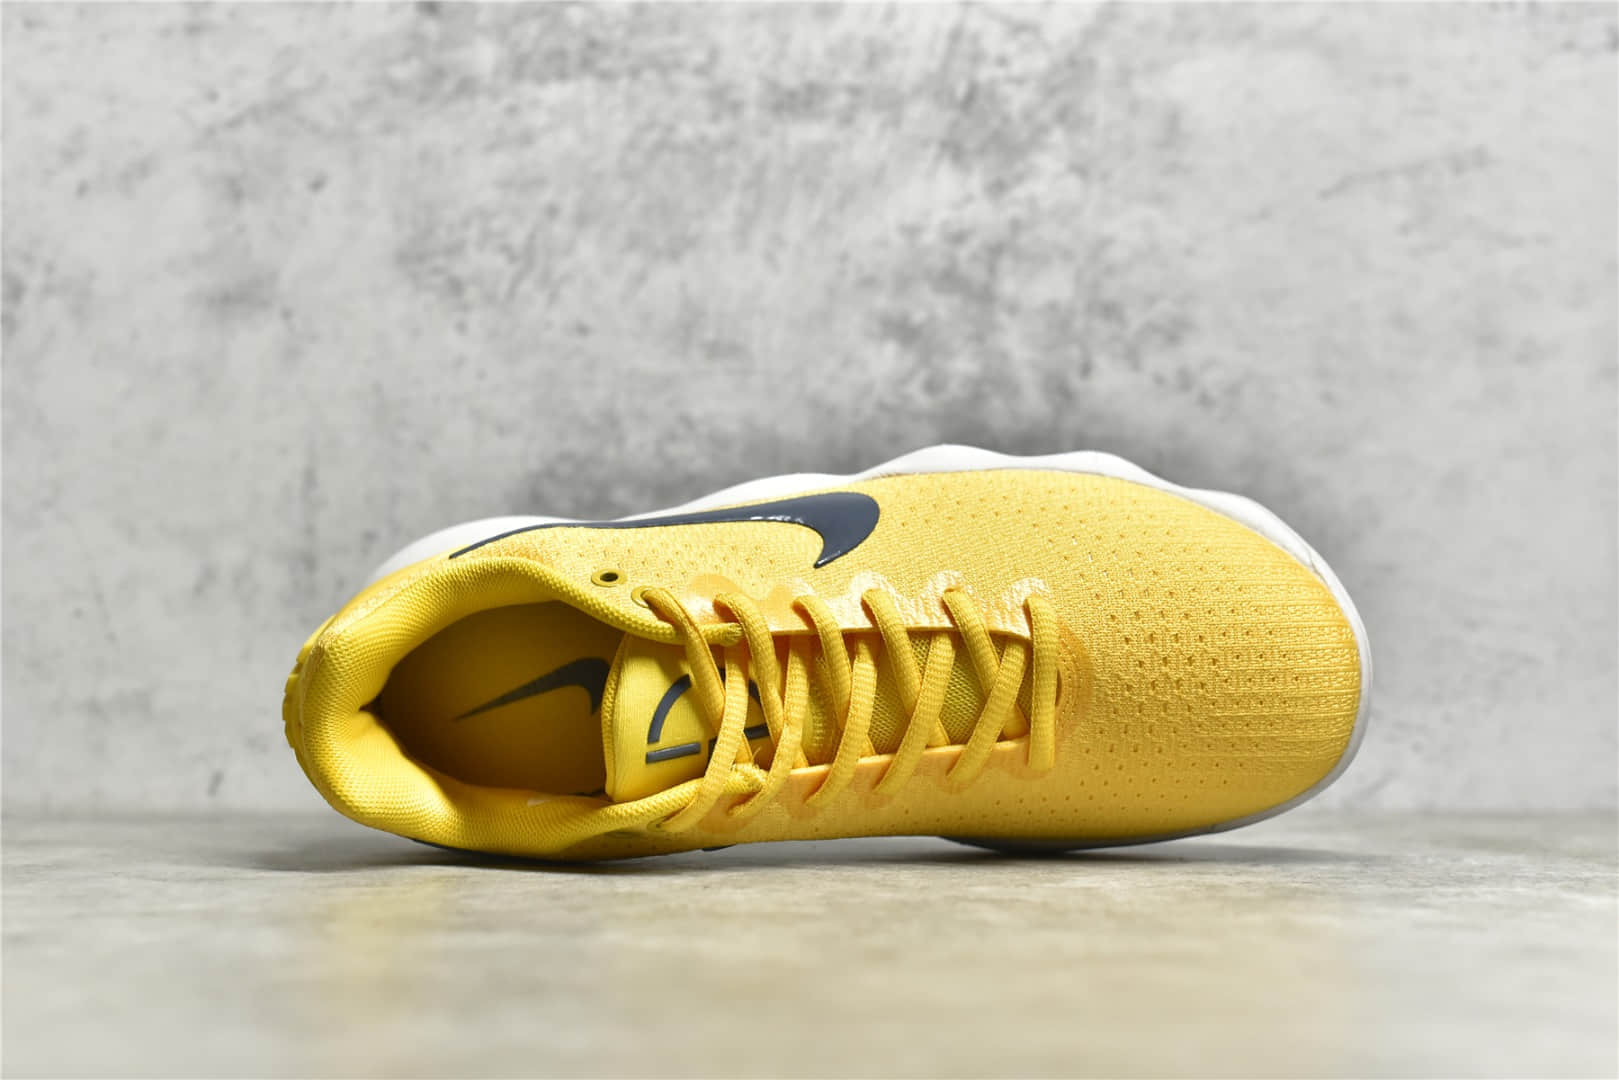 H12纯原版本耐克2017篮球鞋黄色 Nike Hyperdunk 2017 篮球鞋 耐克实战球鞋 货号：942774-703-潮流者之家